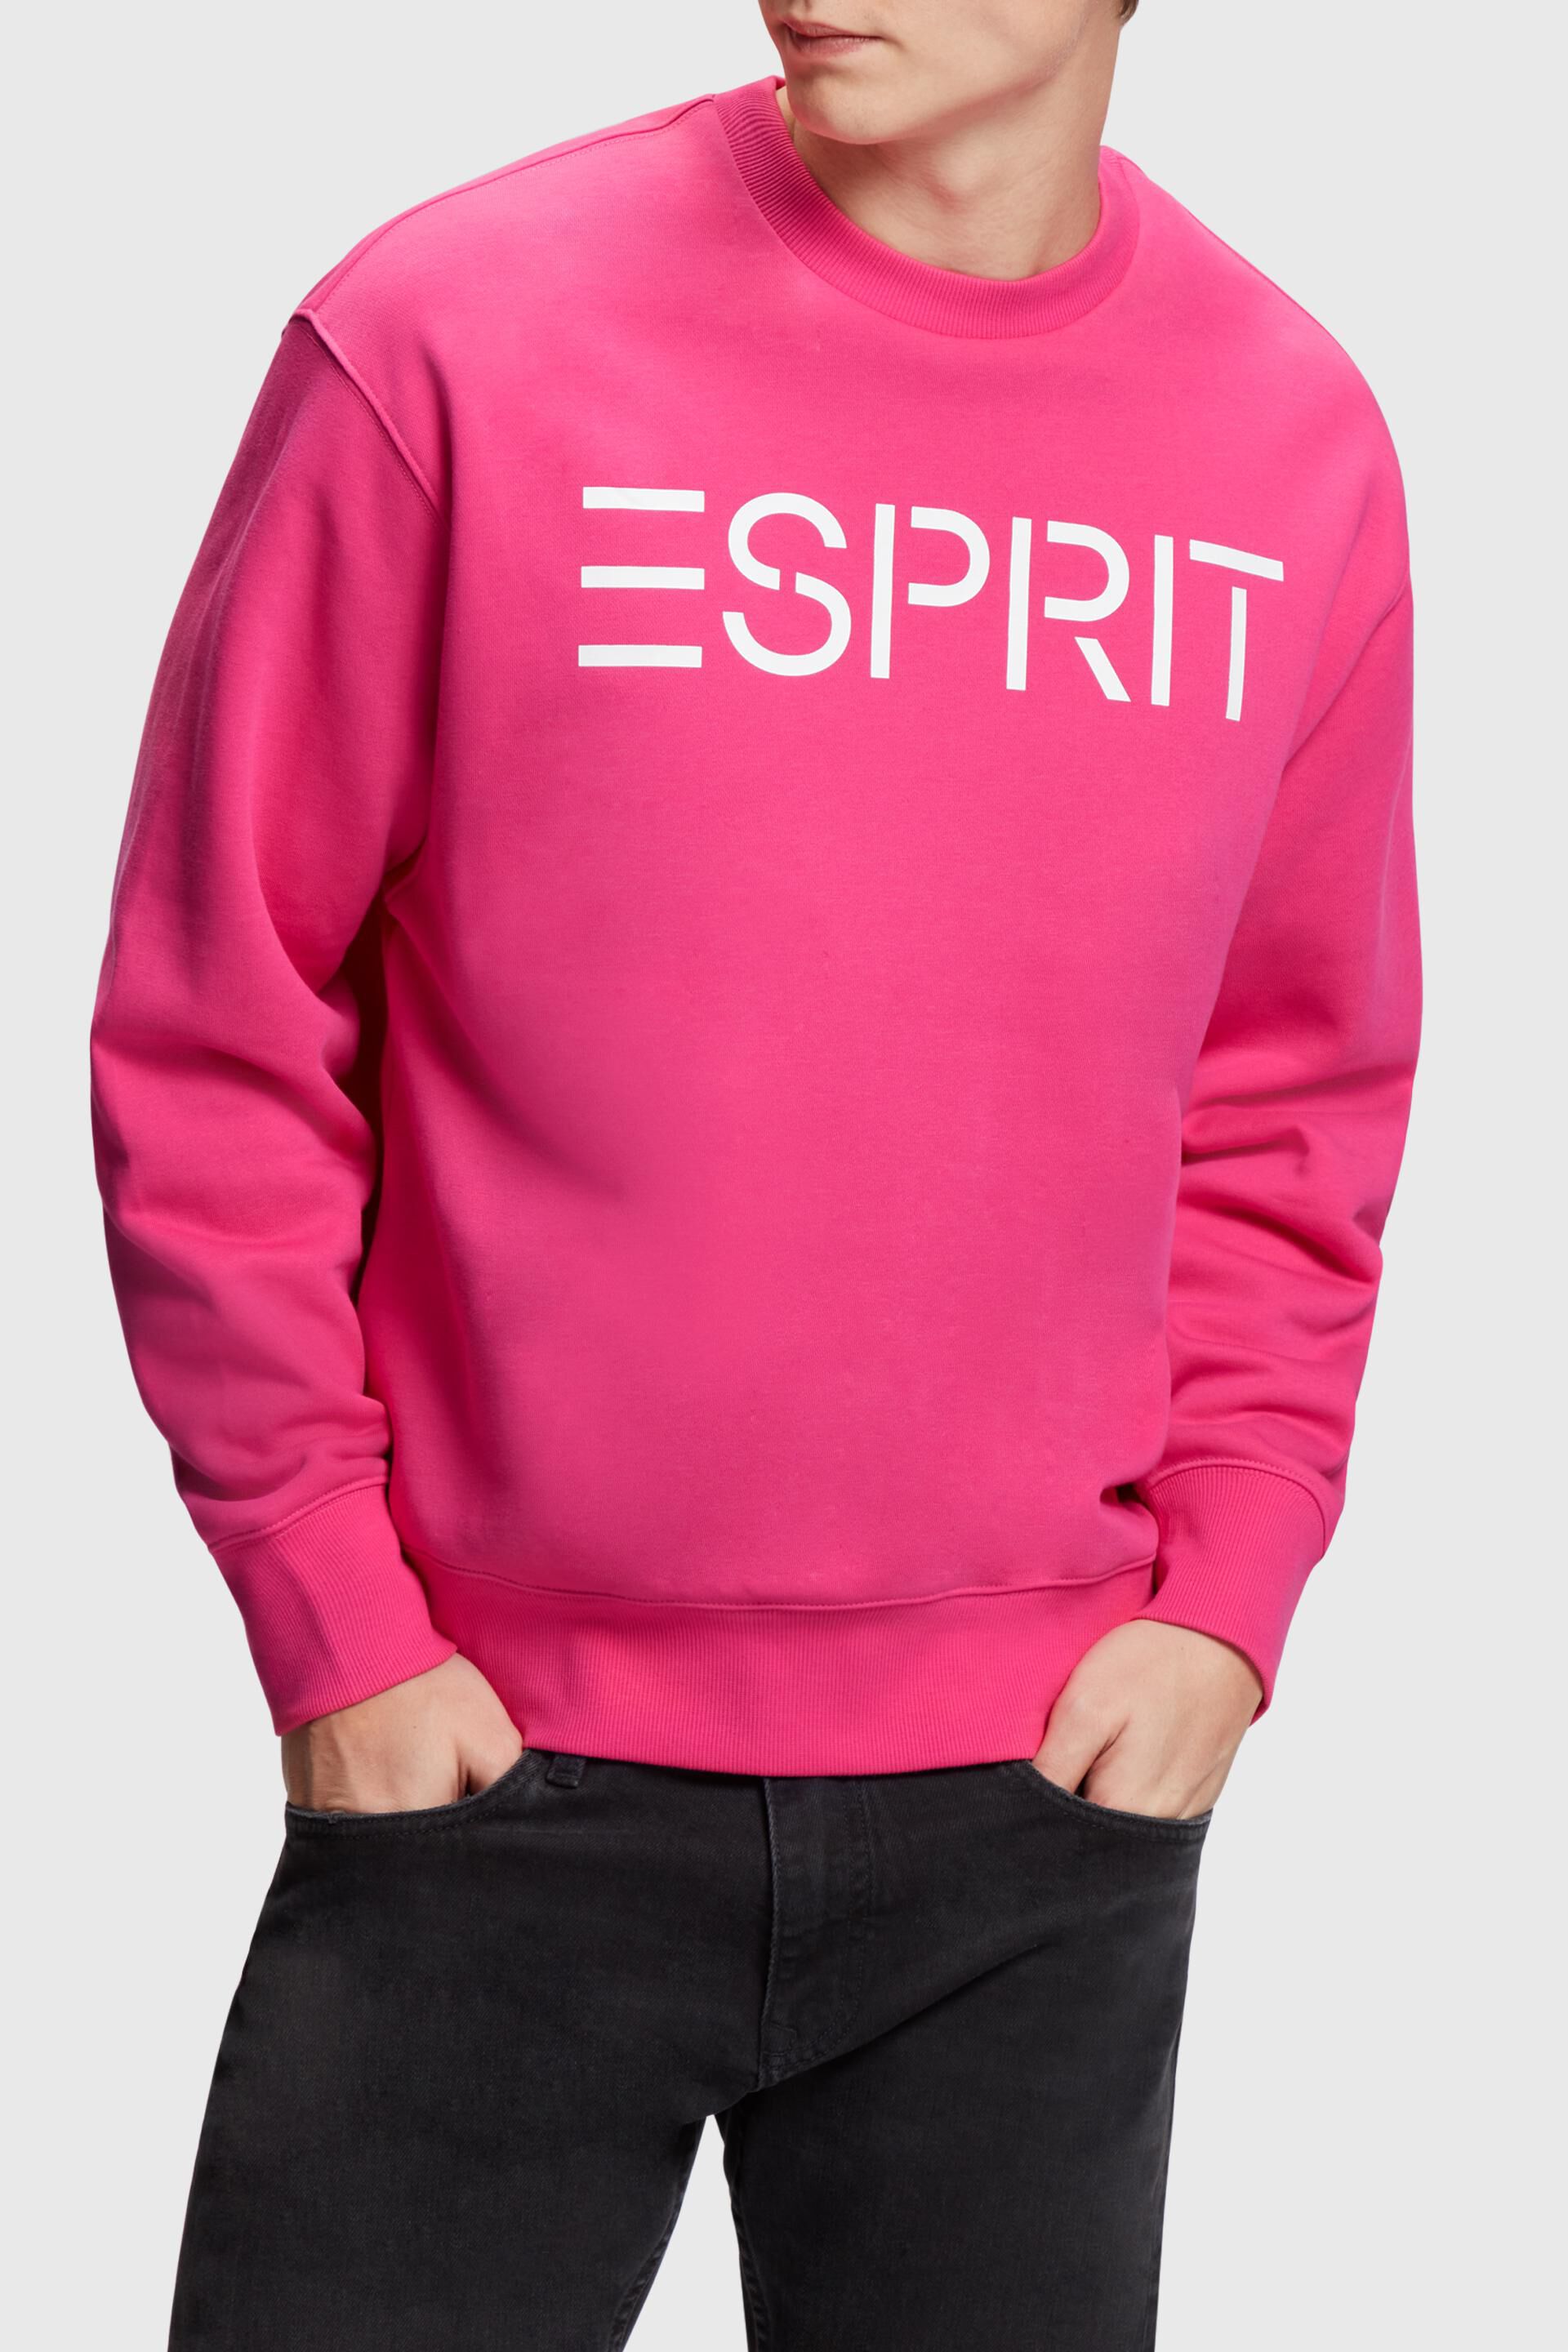 Esprit Logo sweatshirt